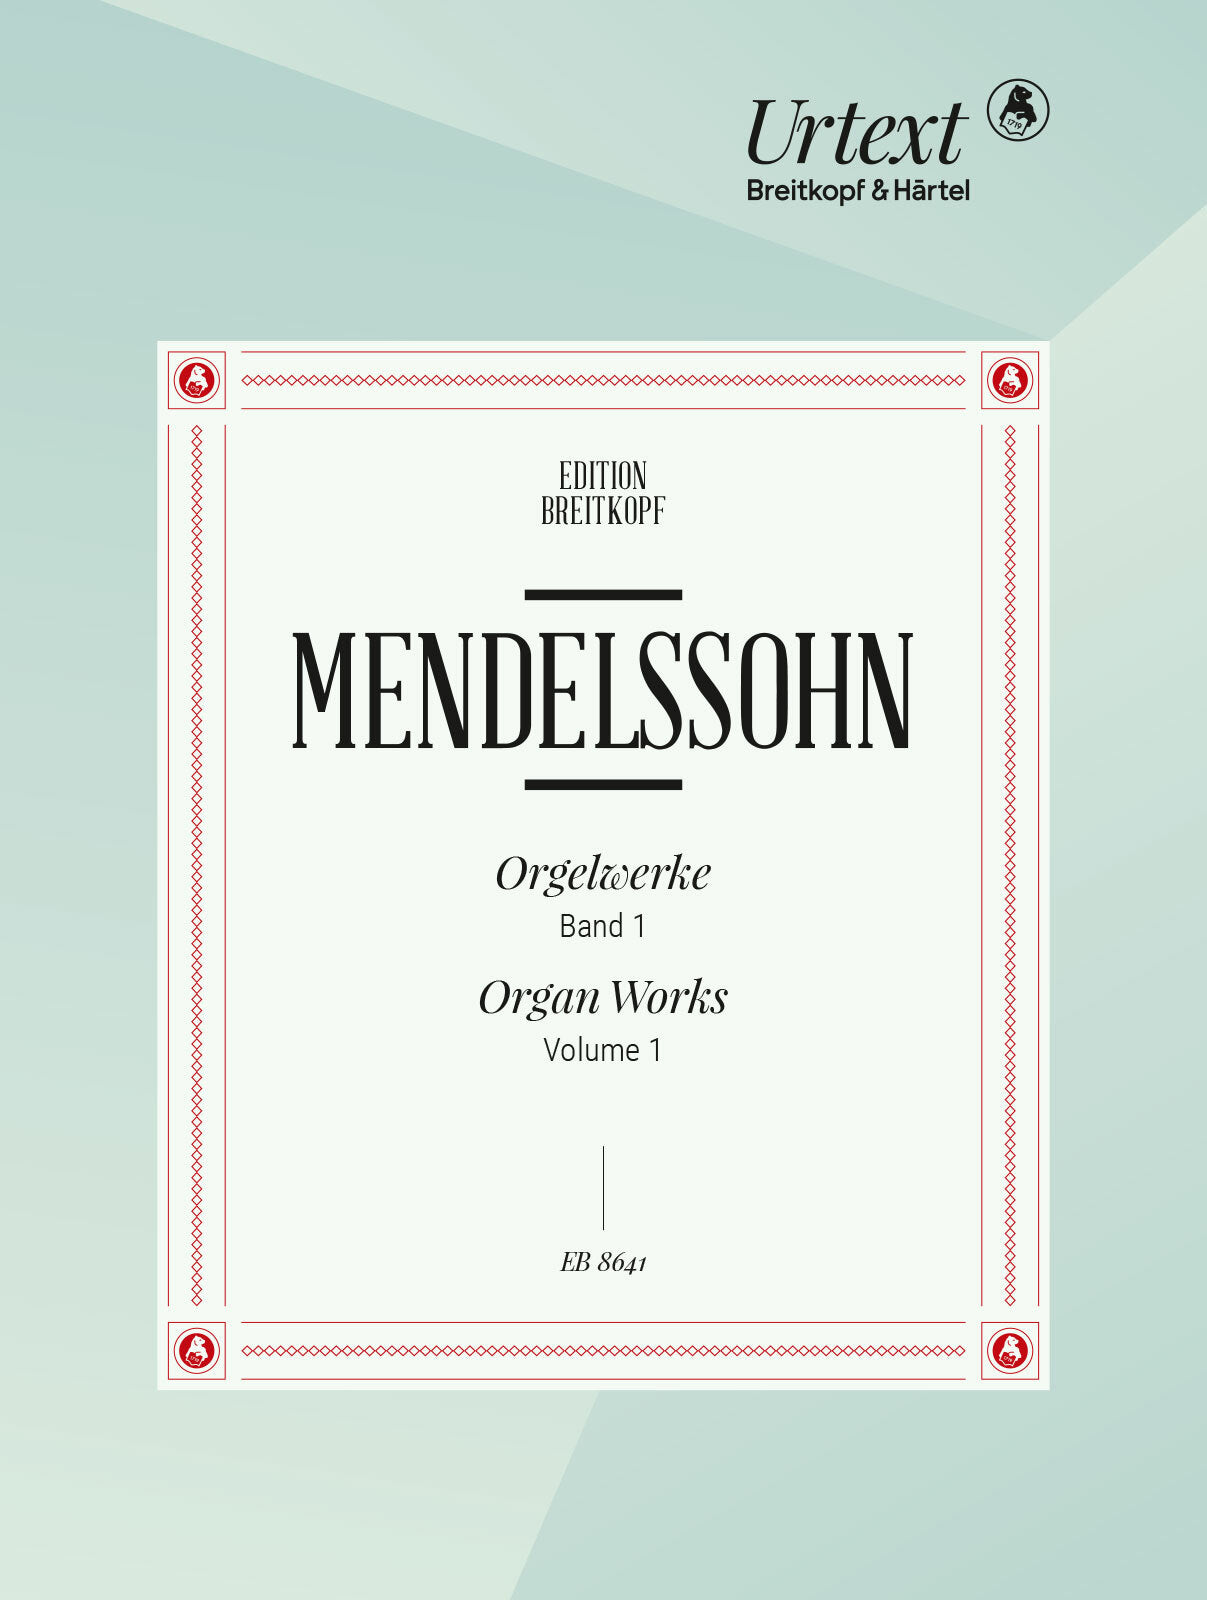 Mendelssohn: 3 Preludes and Fugues, Op. 37 and 6 Sonatas, Op. 65